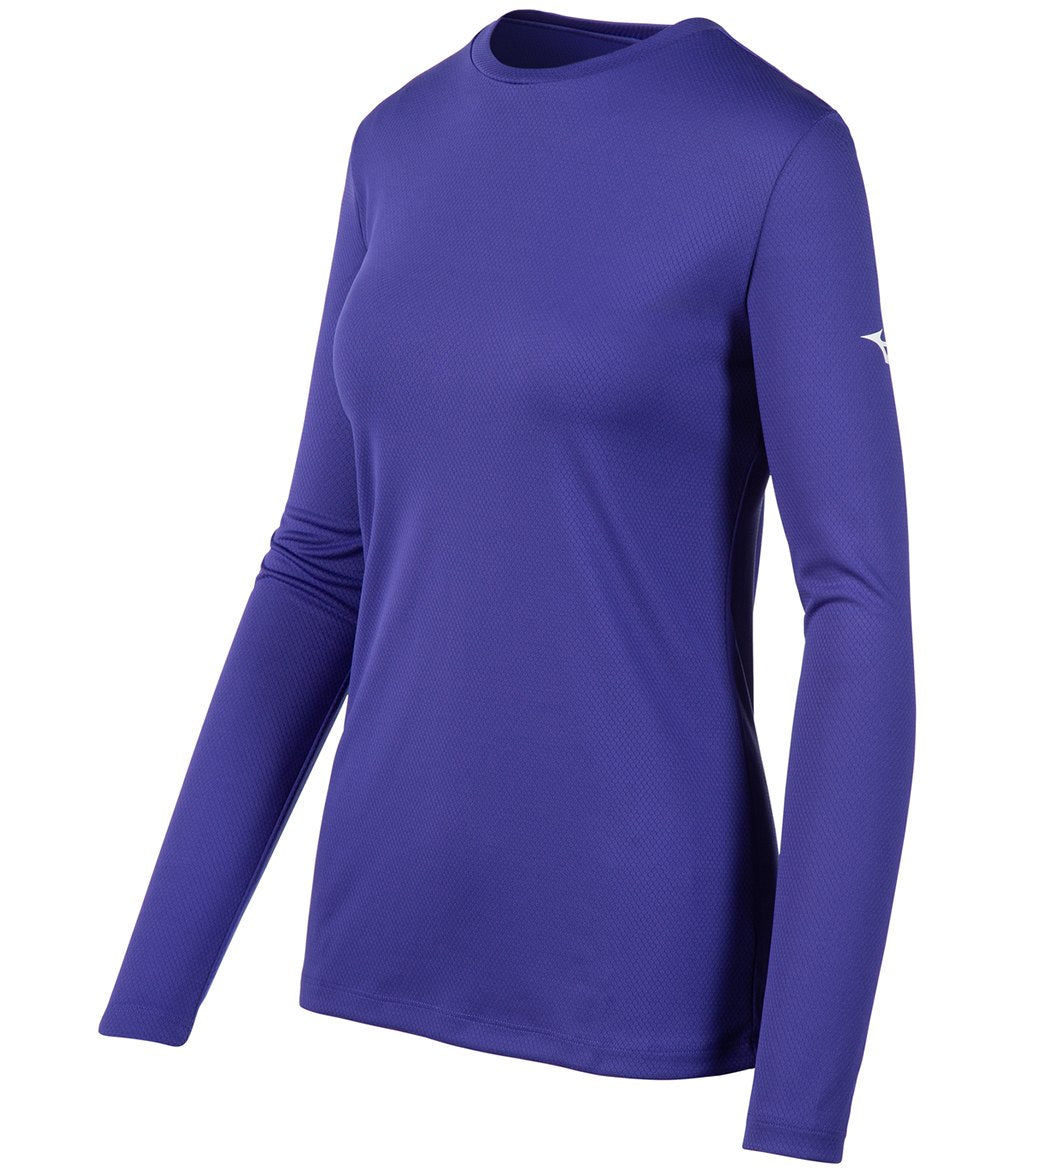 Mizuno Women's Long Sleeve Tee Shirt - Purple Large Polyester - Swimoutlet.com